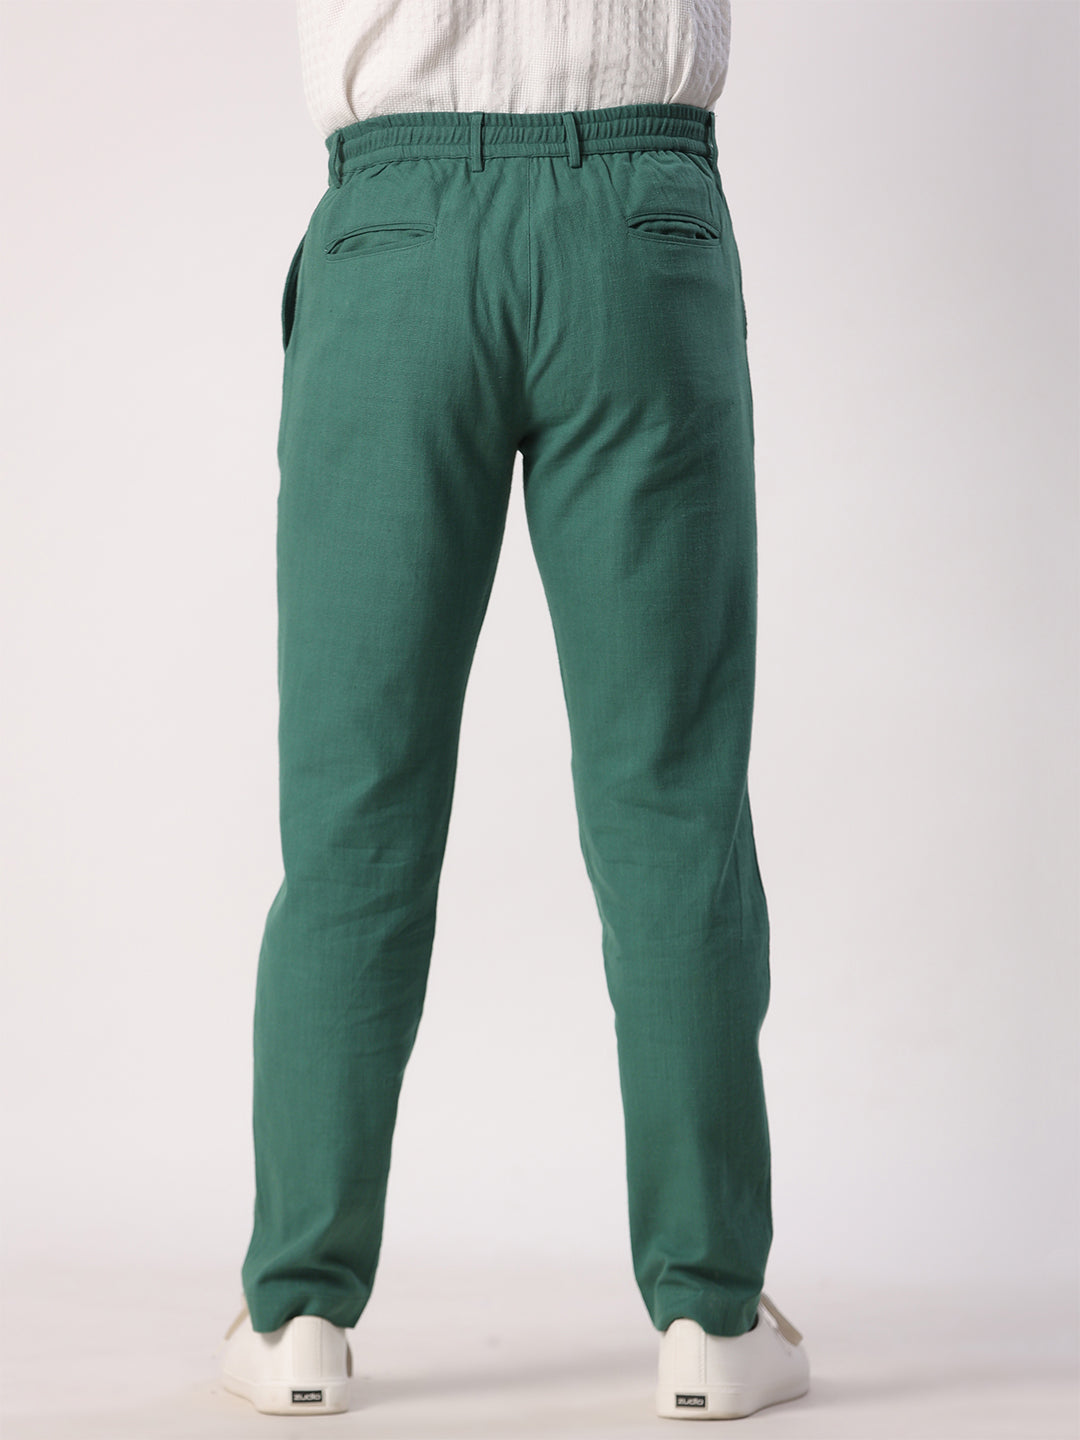 Buy Blue Cotton Comfort Fit Drawstring Pants for Men Online at Fabindia |  20121593